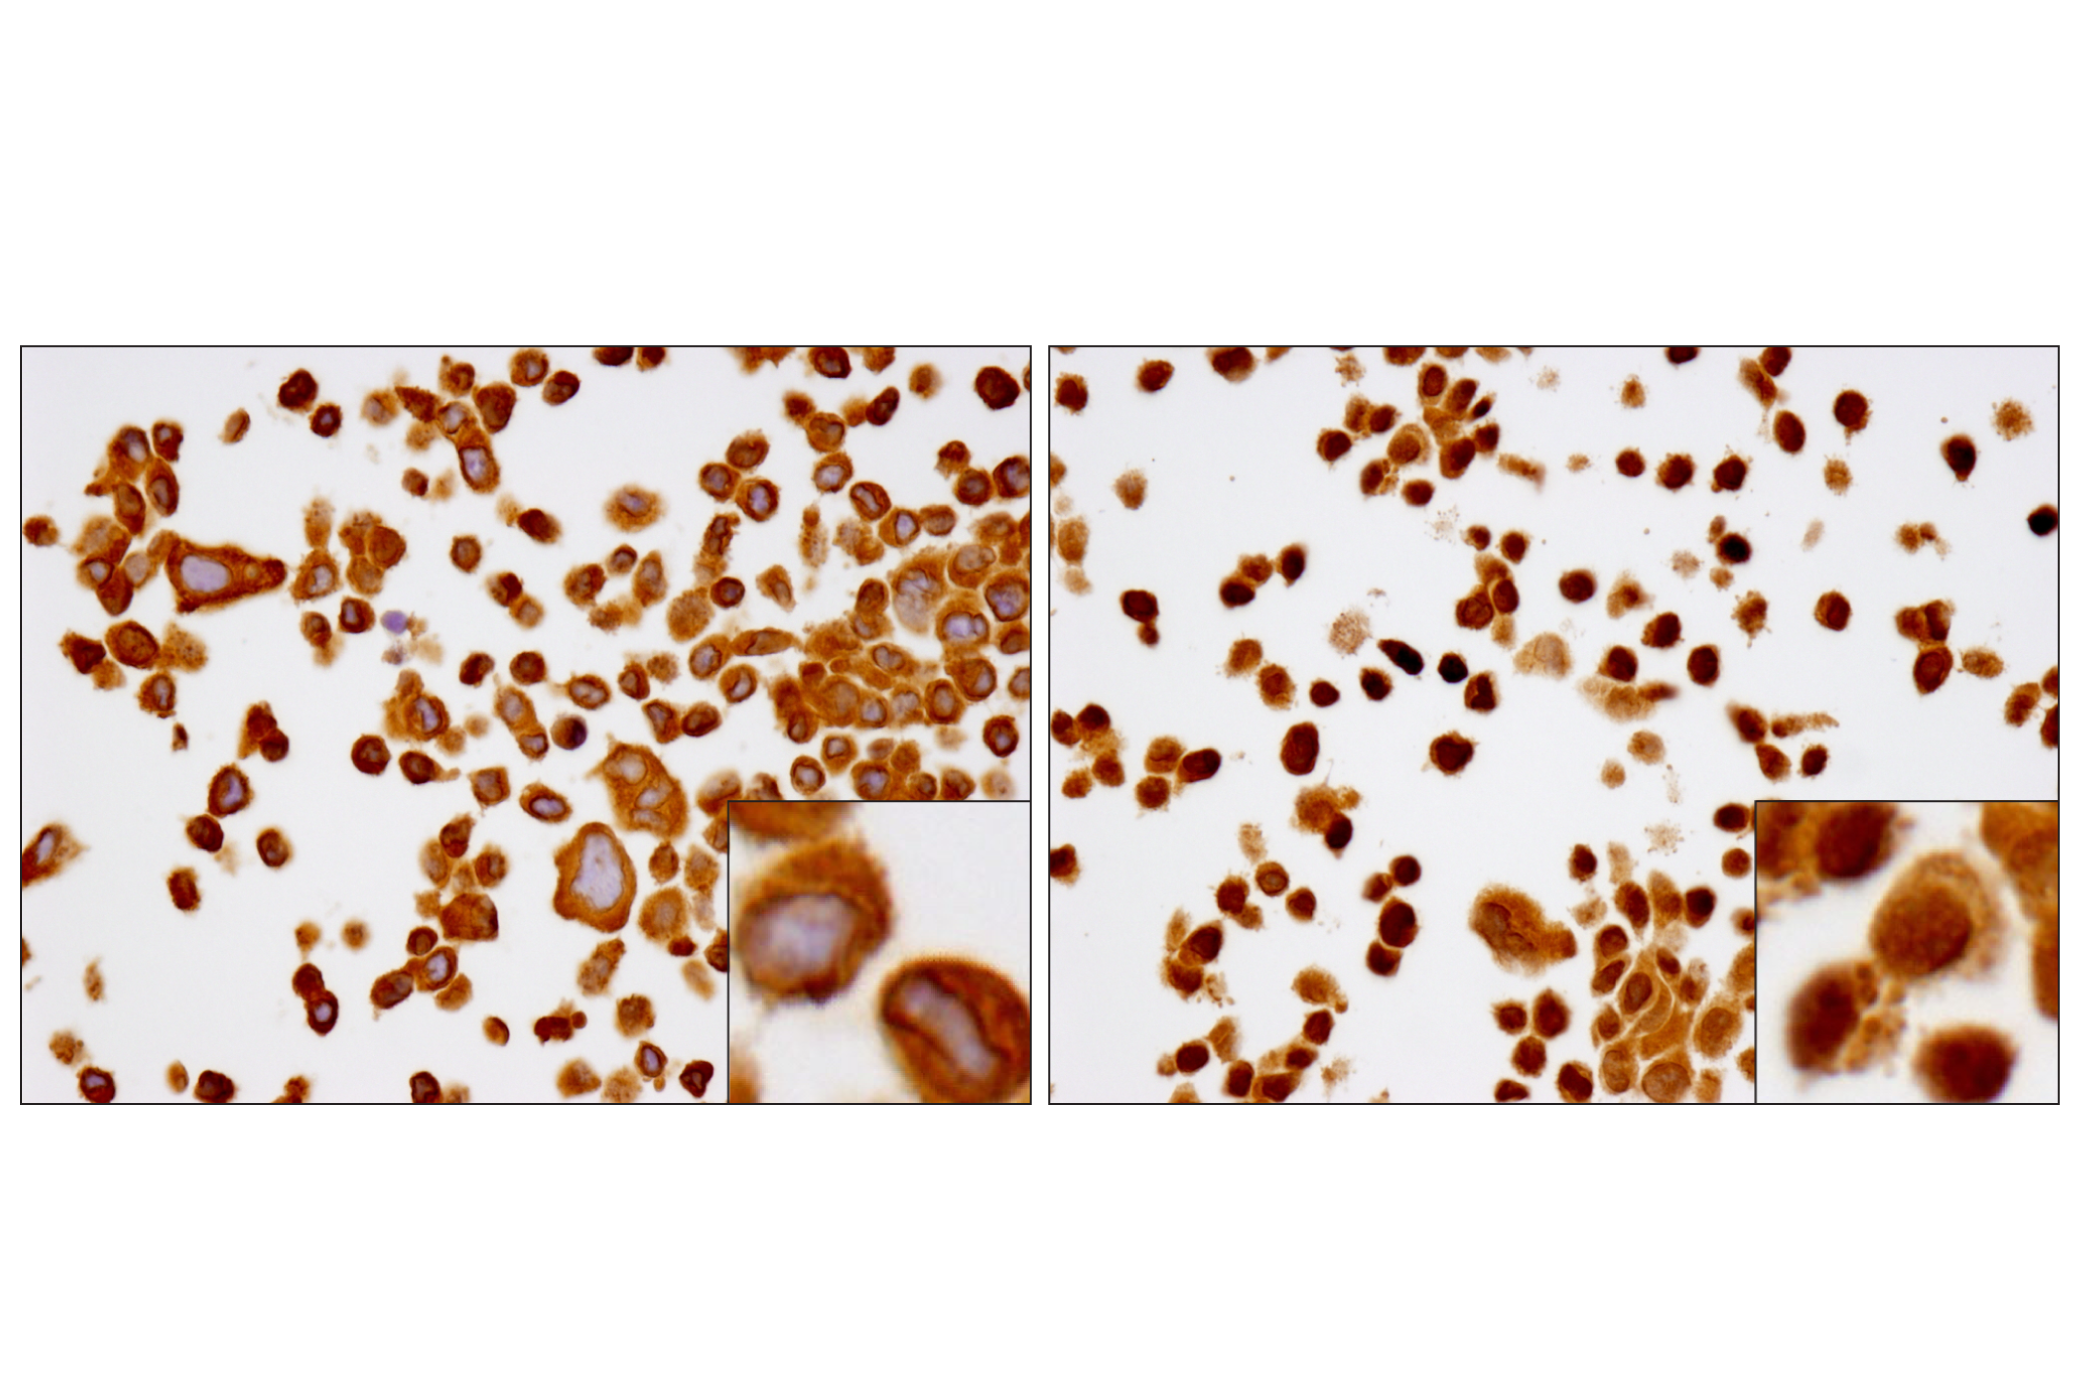  Image 19: NF-κB p65 Antibody Sampler Kit